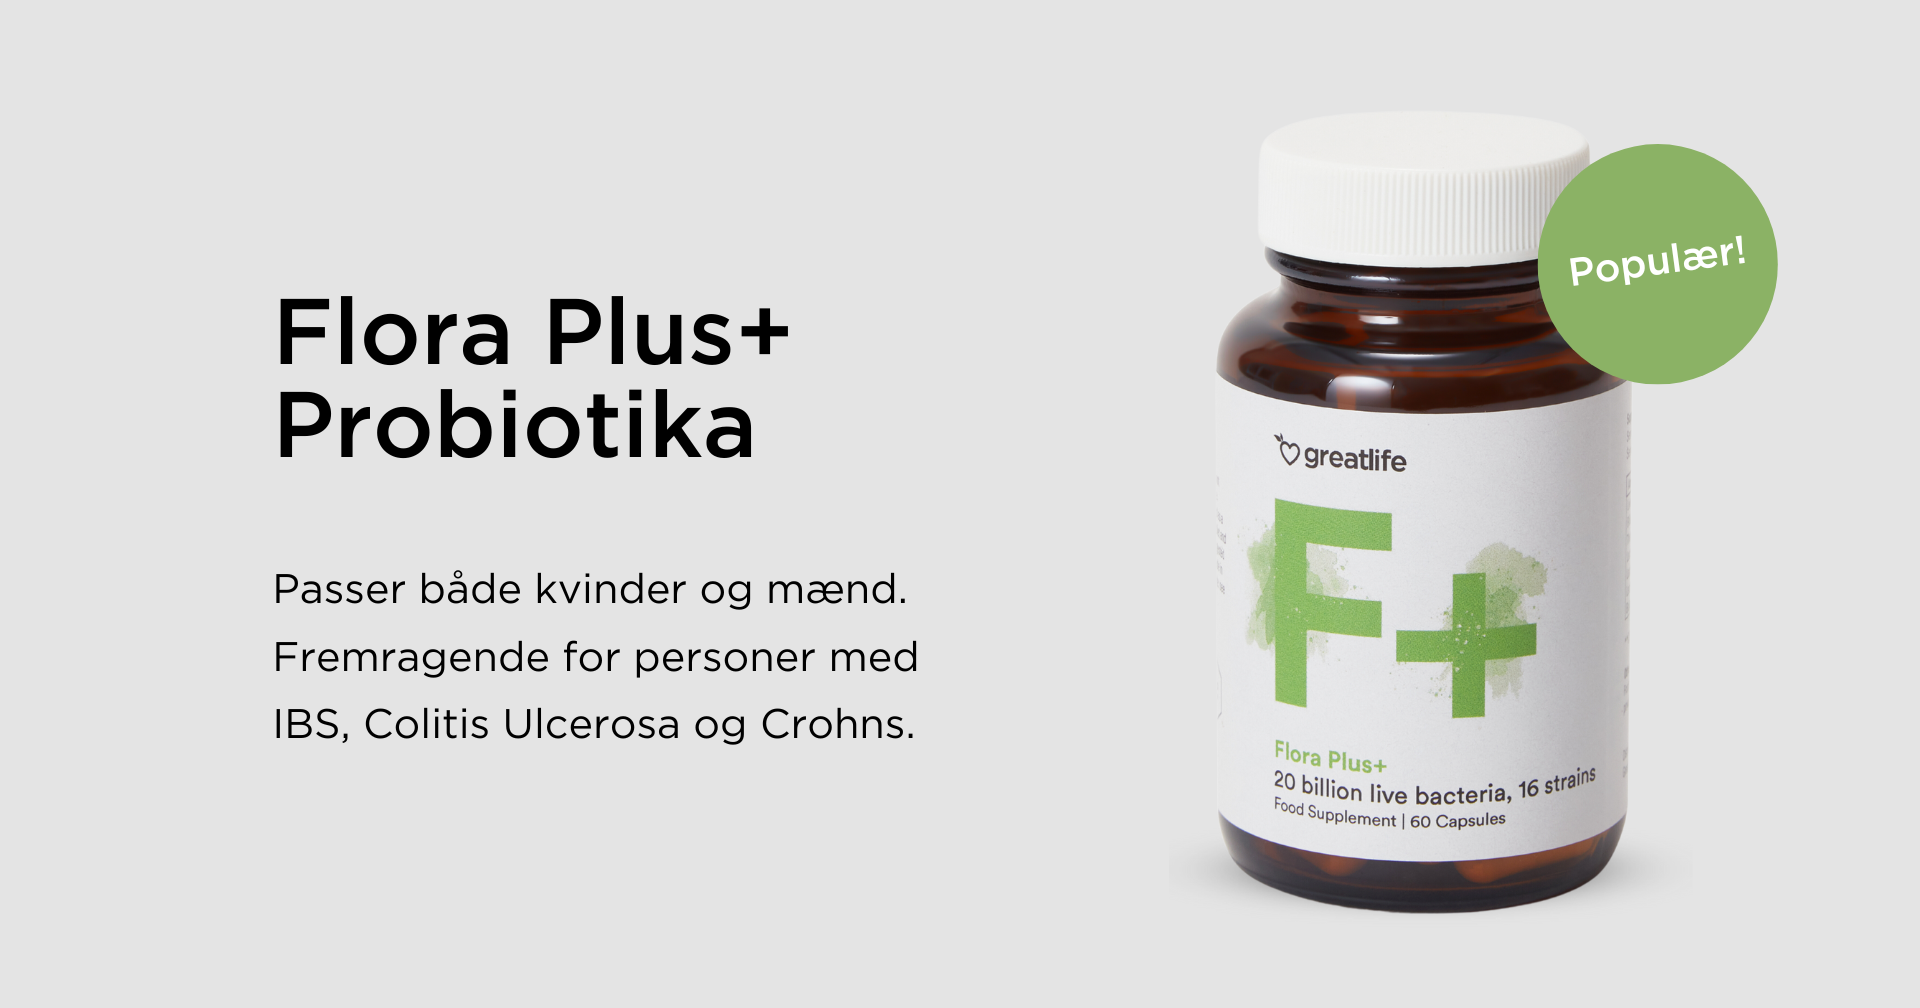 Flora Plus+ probiotika